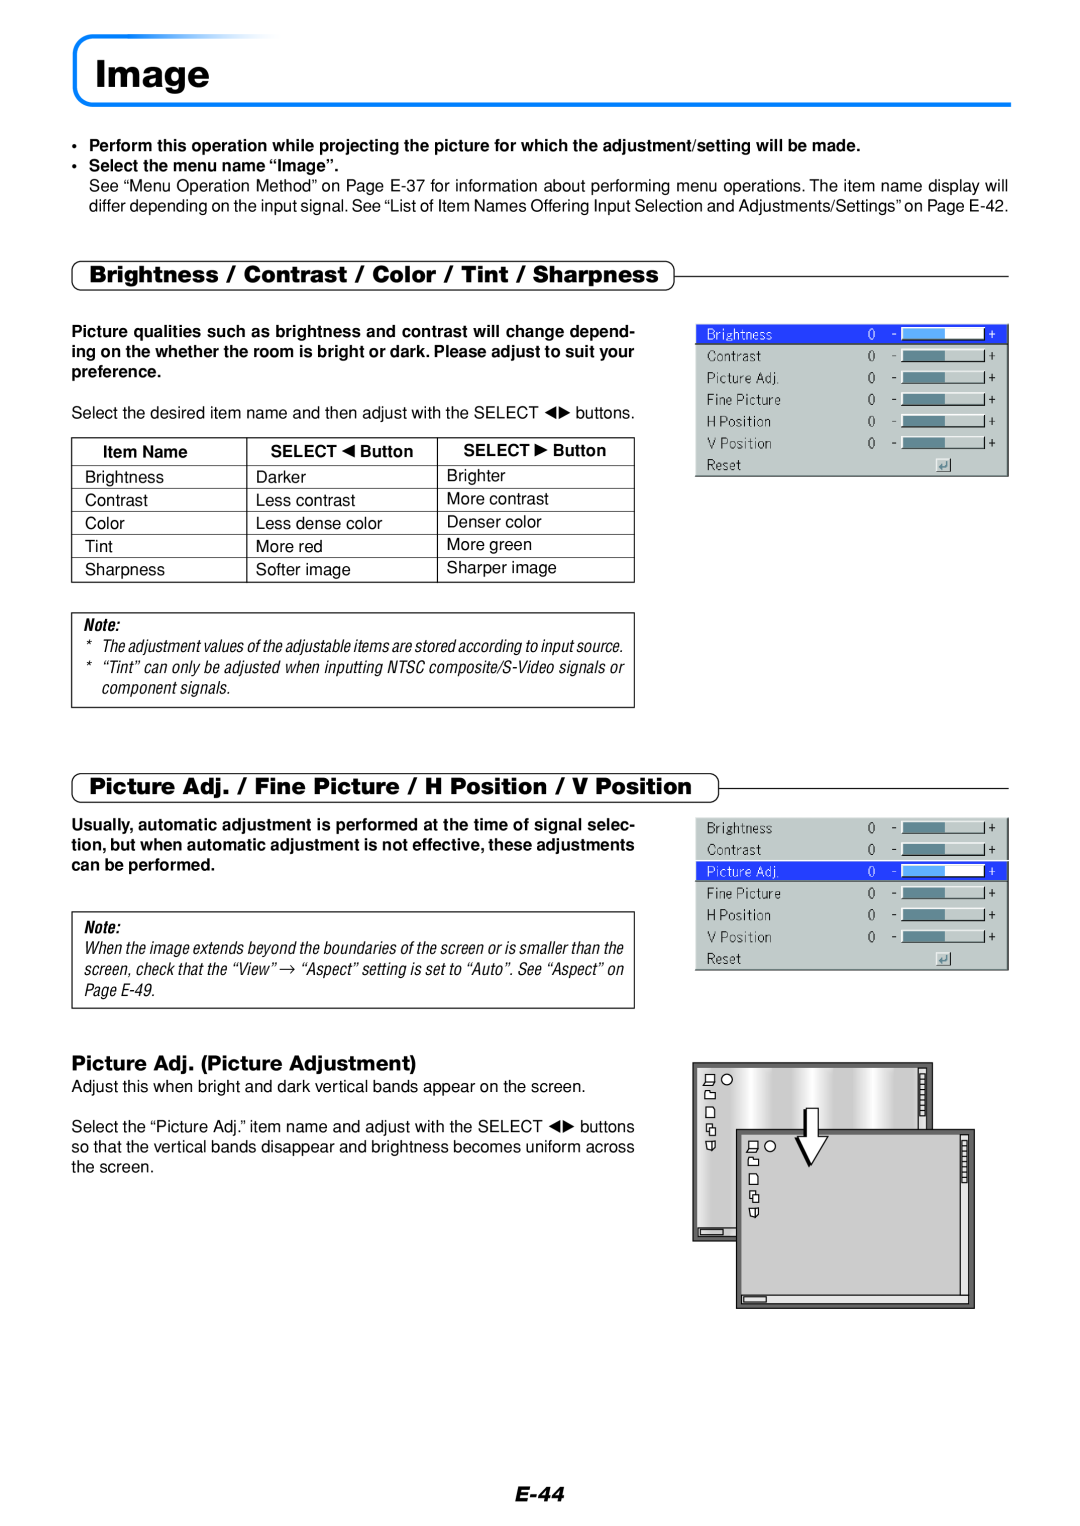 Mitsubishi Electronics DATA PROJECTOR user manual Image, Brightness / Contrast / Color / Tint / Sharpness, E-44, Item Name 